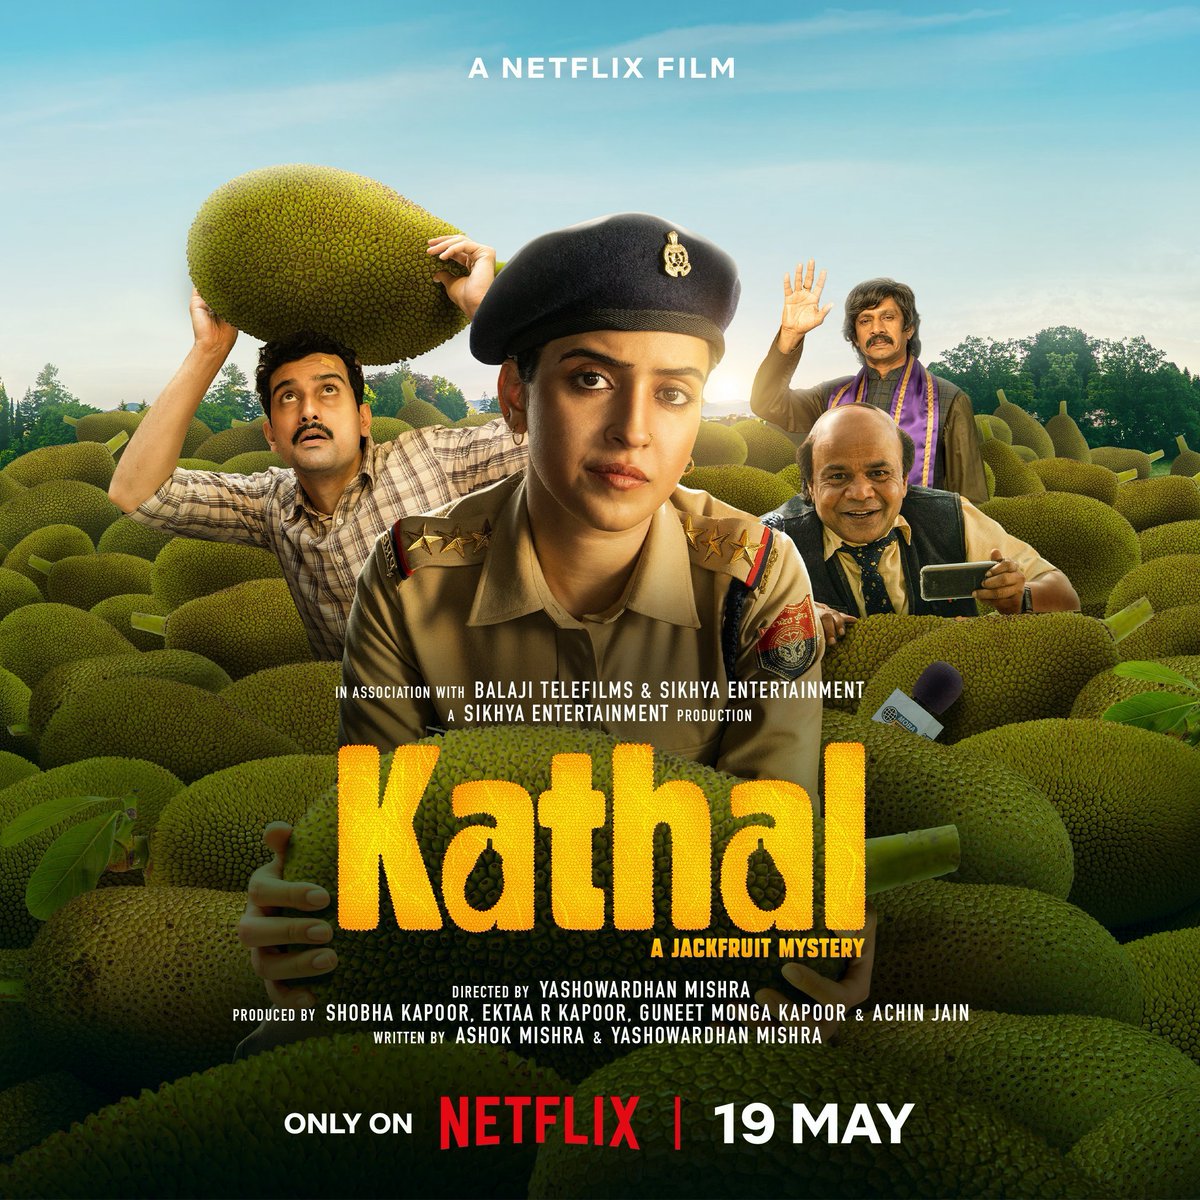 #Kathal by #YashowardhanMishra ft. #SanyaaMalhotra #AnantVijayJoshi #VijayRaaz #RajpalYadav  #GovindPandey #ShashiRanjan #GurpalSingh & #RaghubirYadav, premieres May 19th on #Netflix

#GuneetMonga #FilmyKhabariya